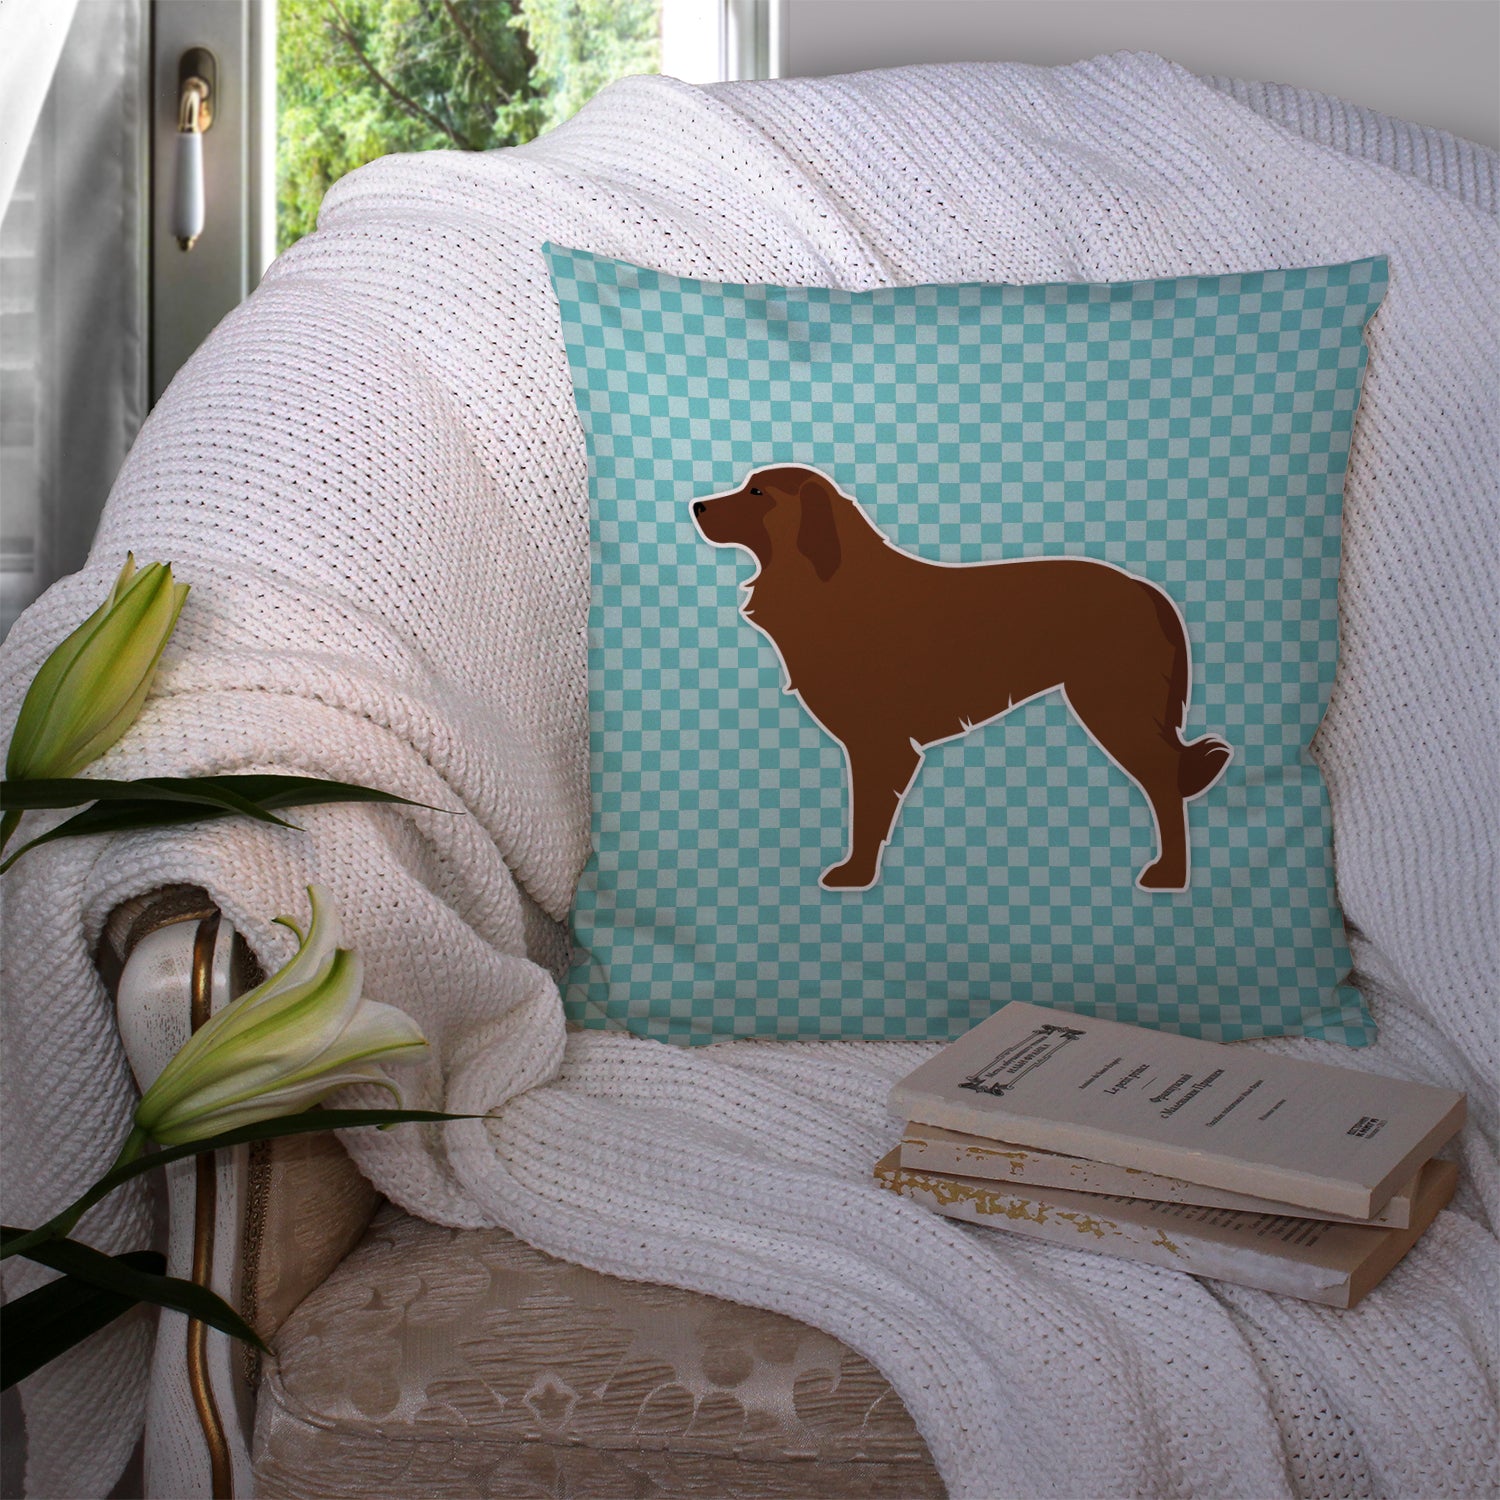 Portuguese Sheepdog Dog Checkerboard Blue Fabric Decorative Pillow BB3731PW1414 - the-store.com